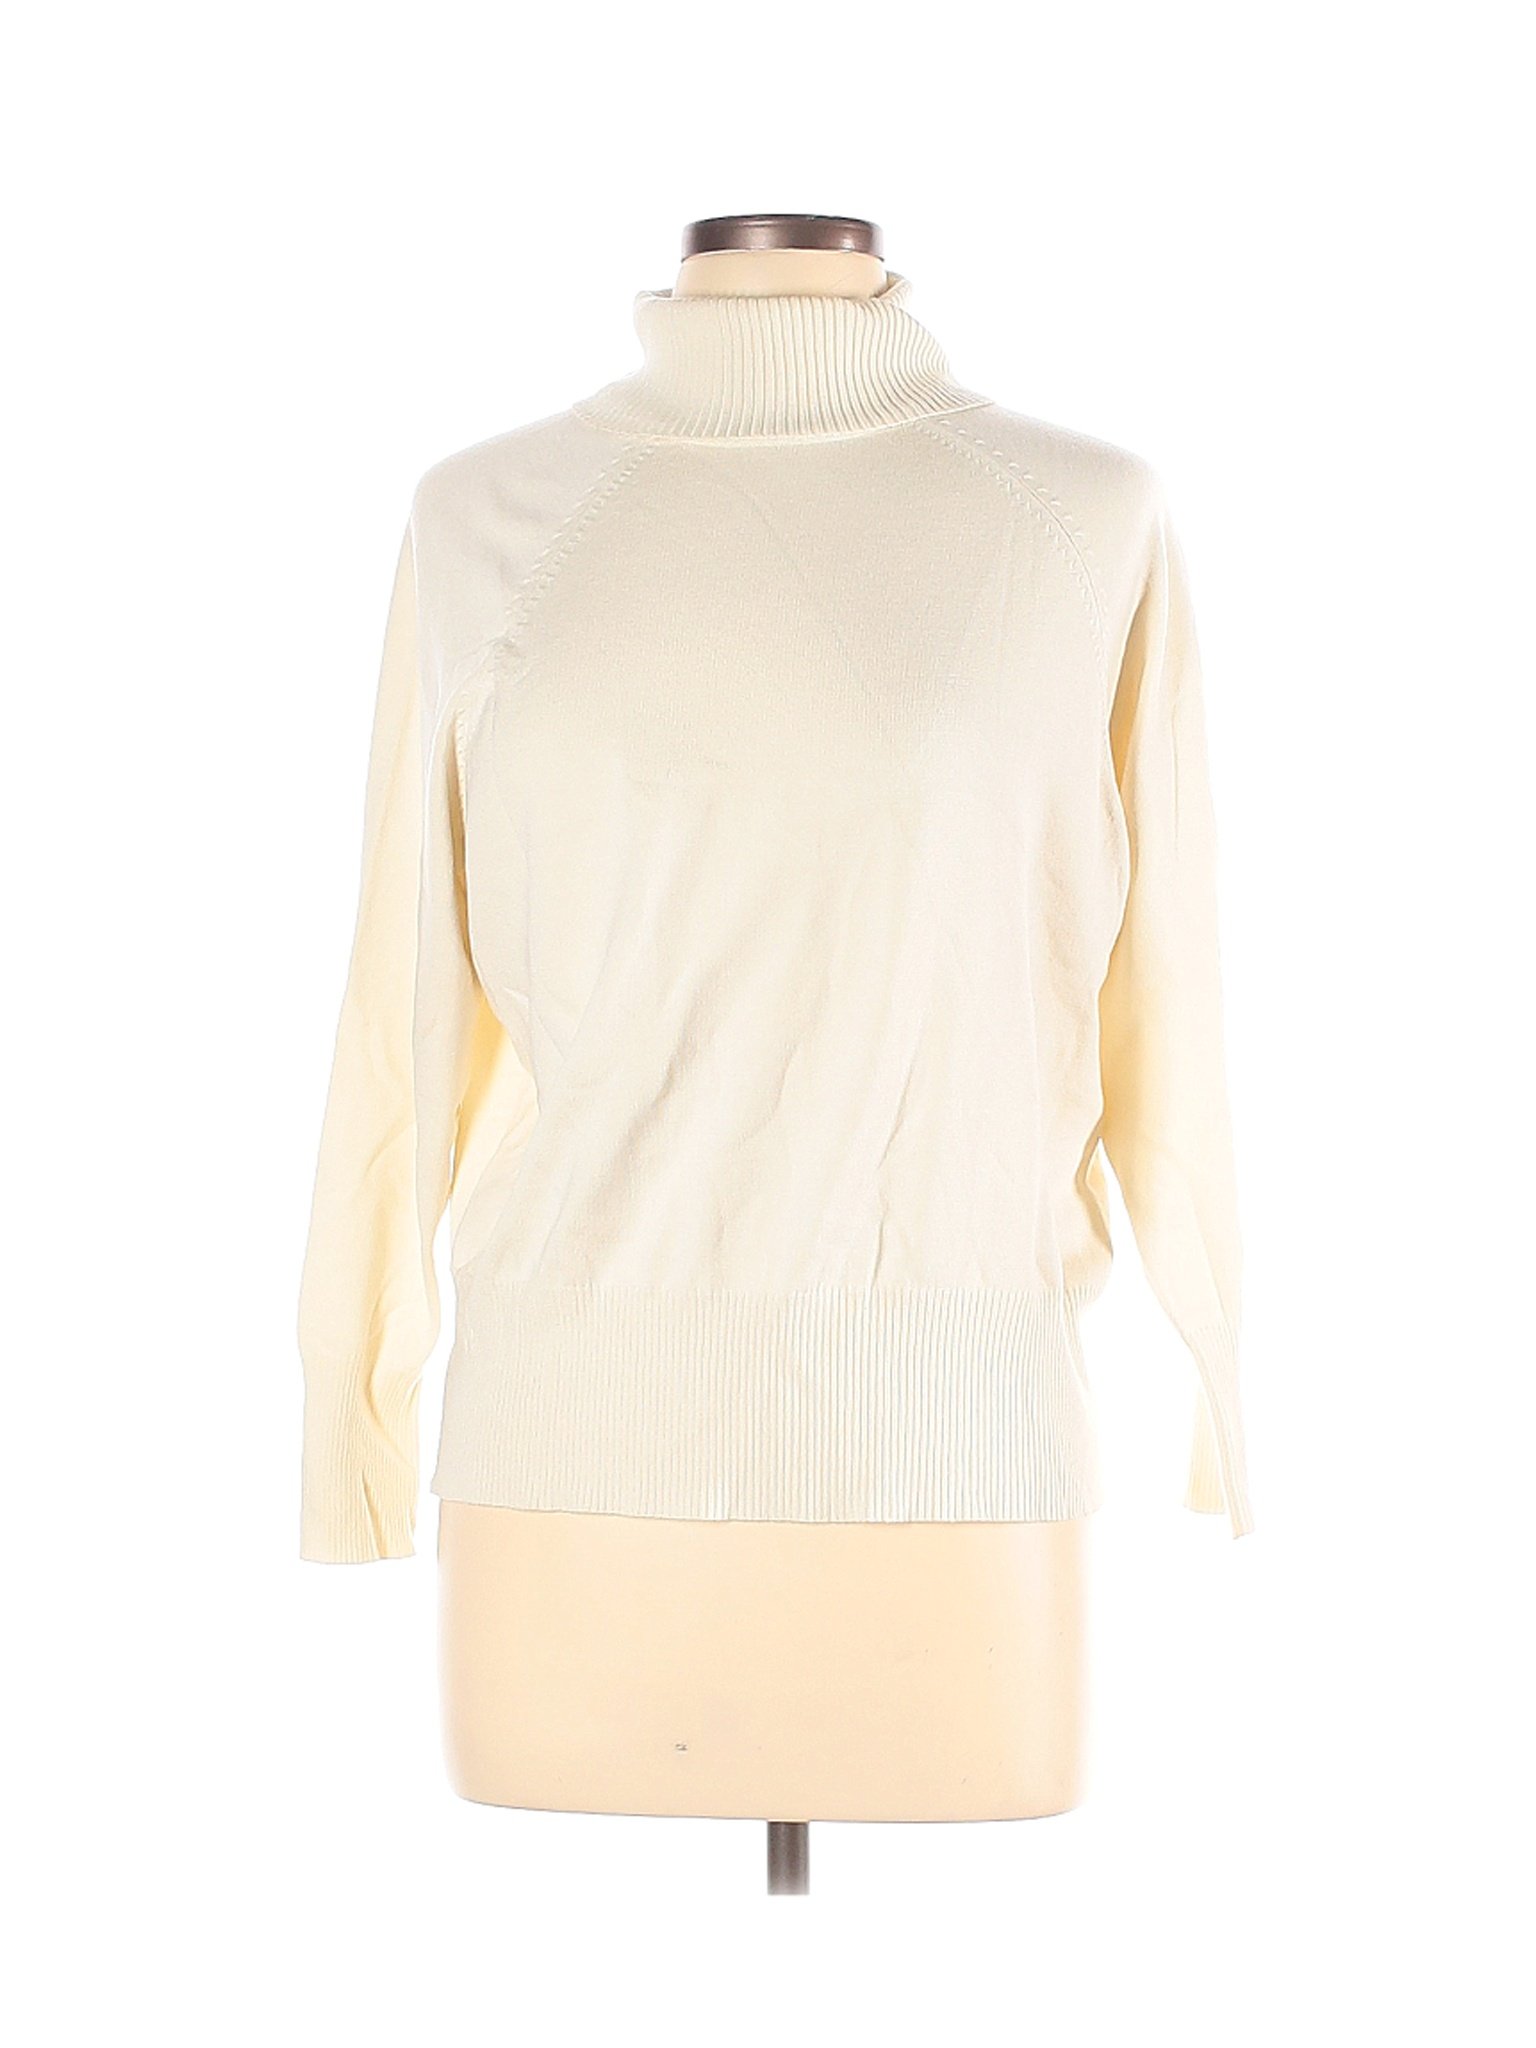 Lane Bryant Women Ivory Turtleneck Sweater 14 Plus | eBay